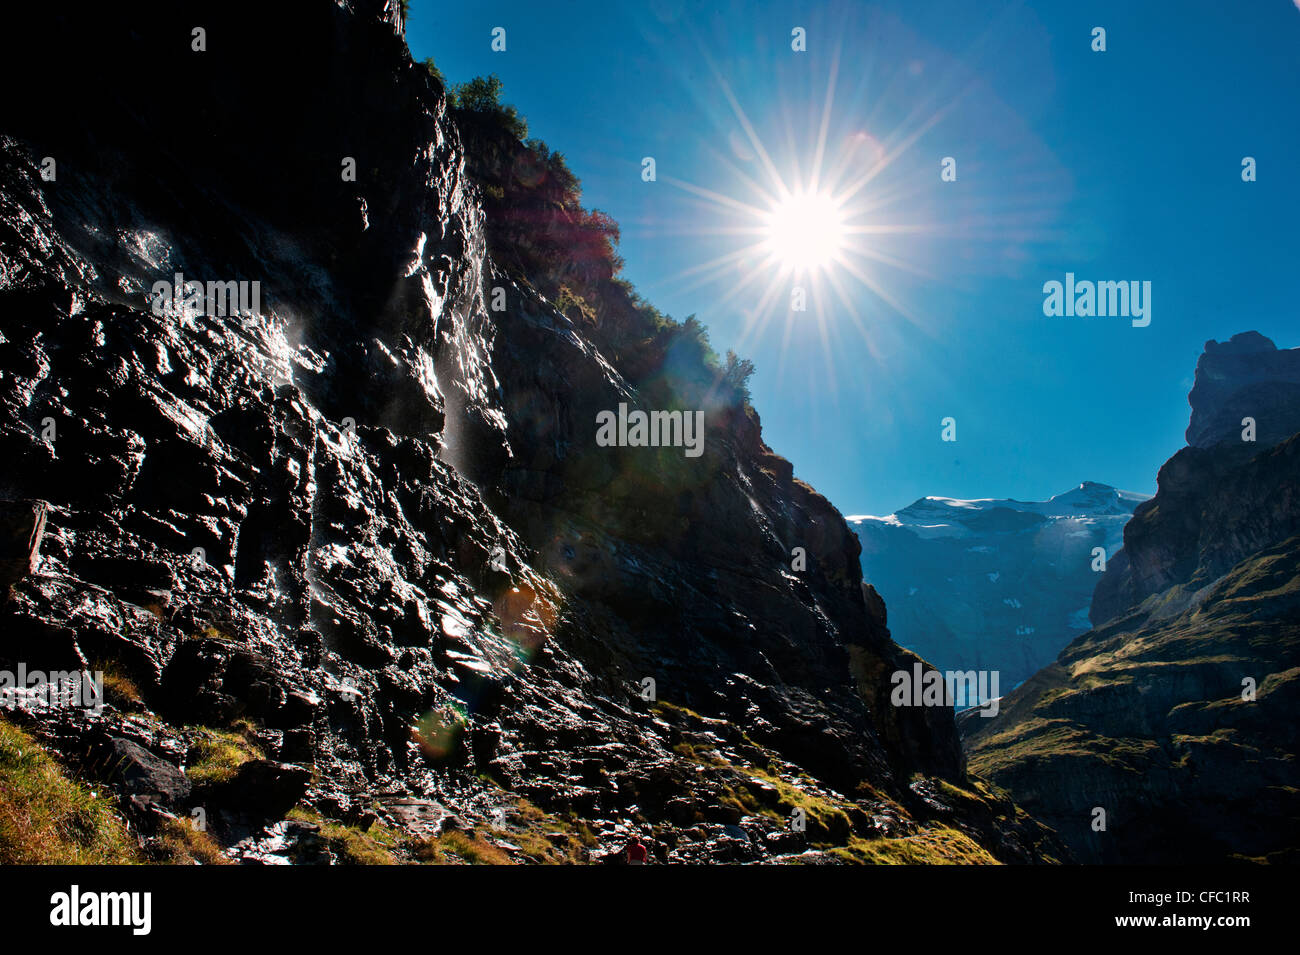 Alps, Berge, mountain landscape, mountainous landscape, mountain scenery, mountainscape, mountains, Bernese Alps, cliff, rock fa Stock Photo